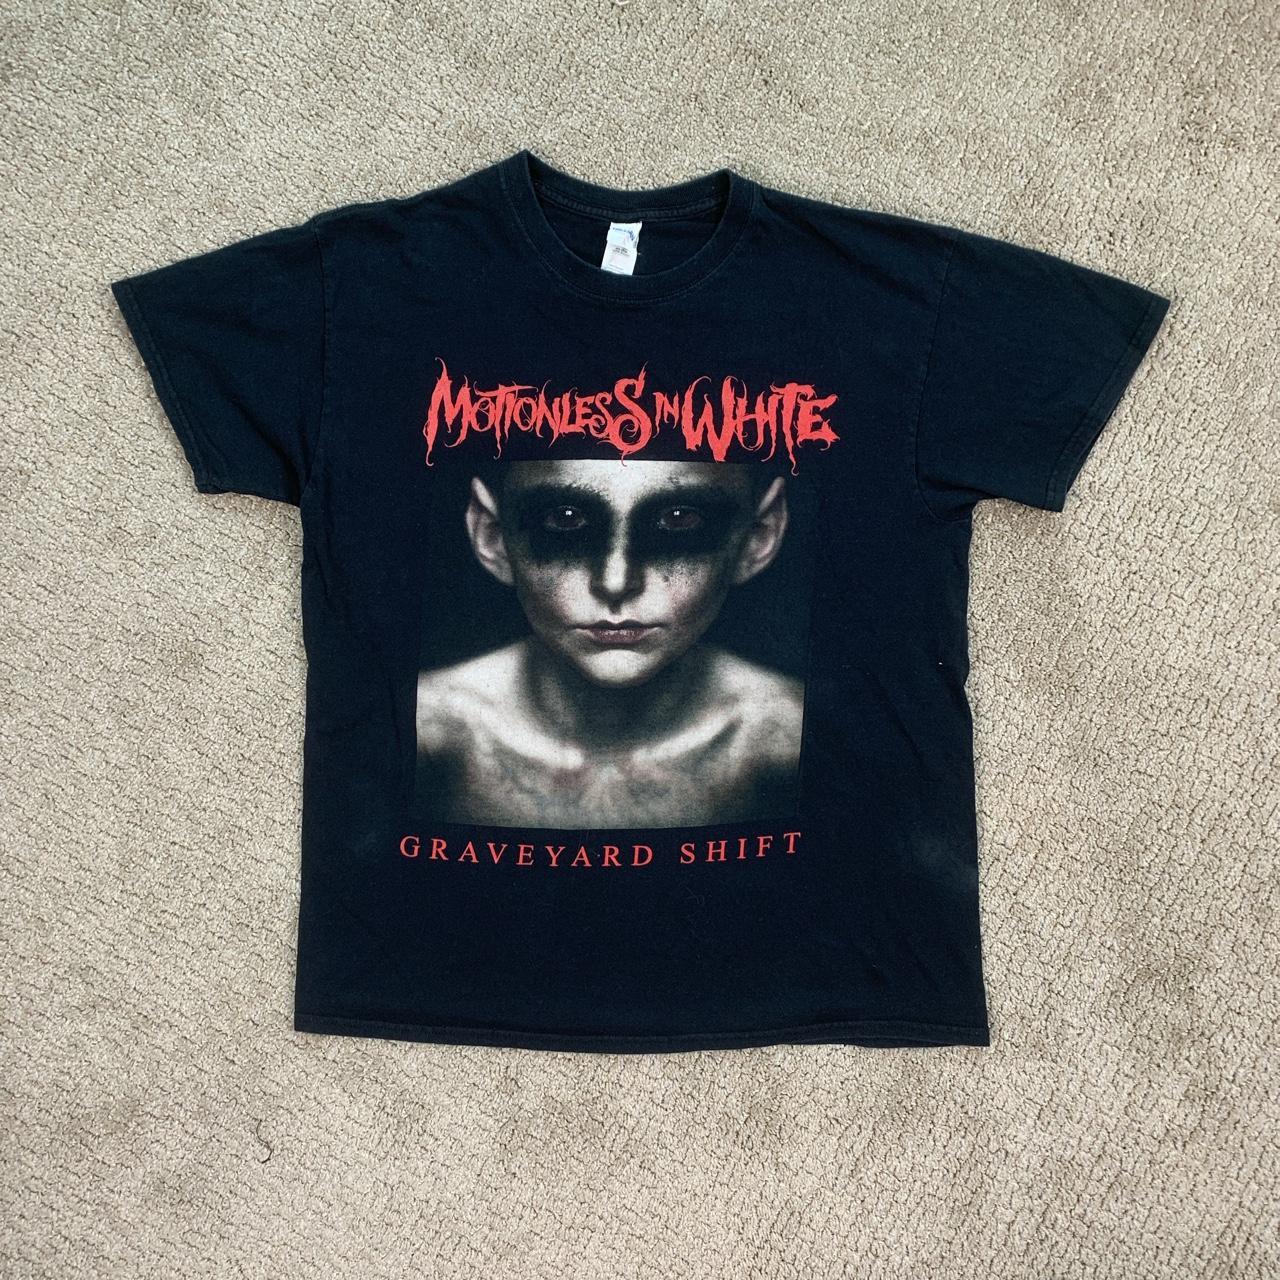 Motionless In White Graveyard Shift Shirt Size Medium